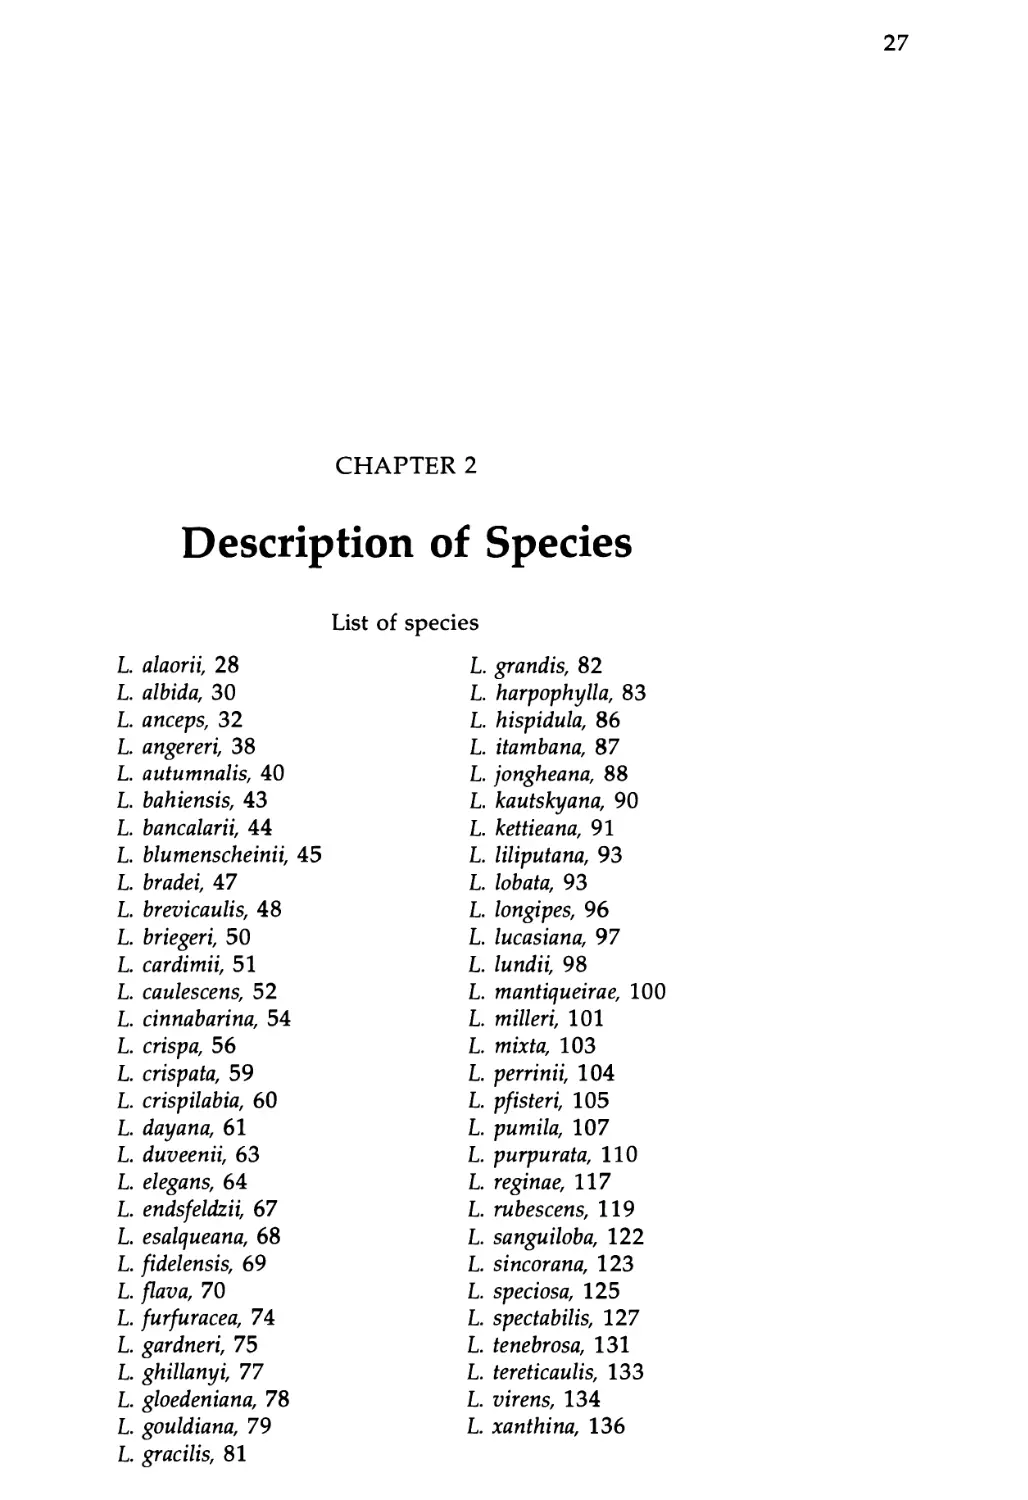 2. Description of the Species